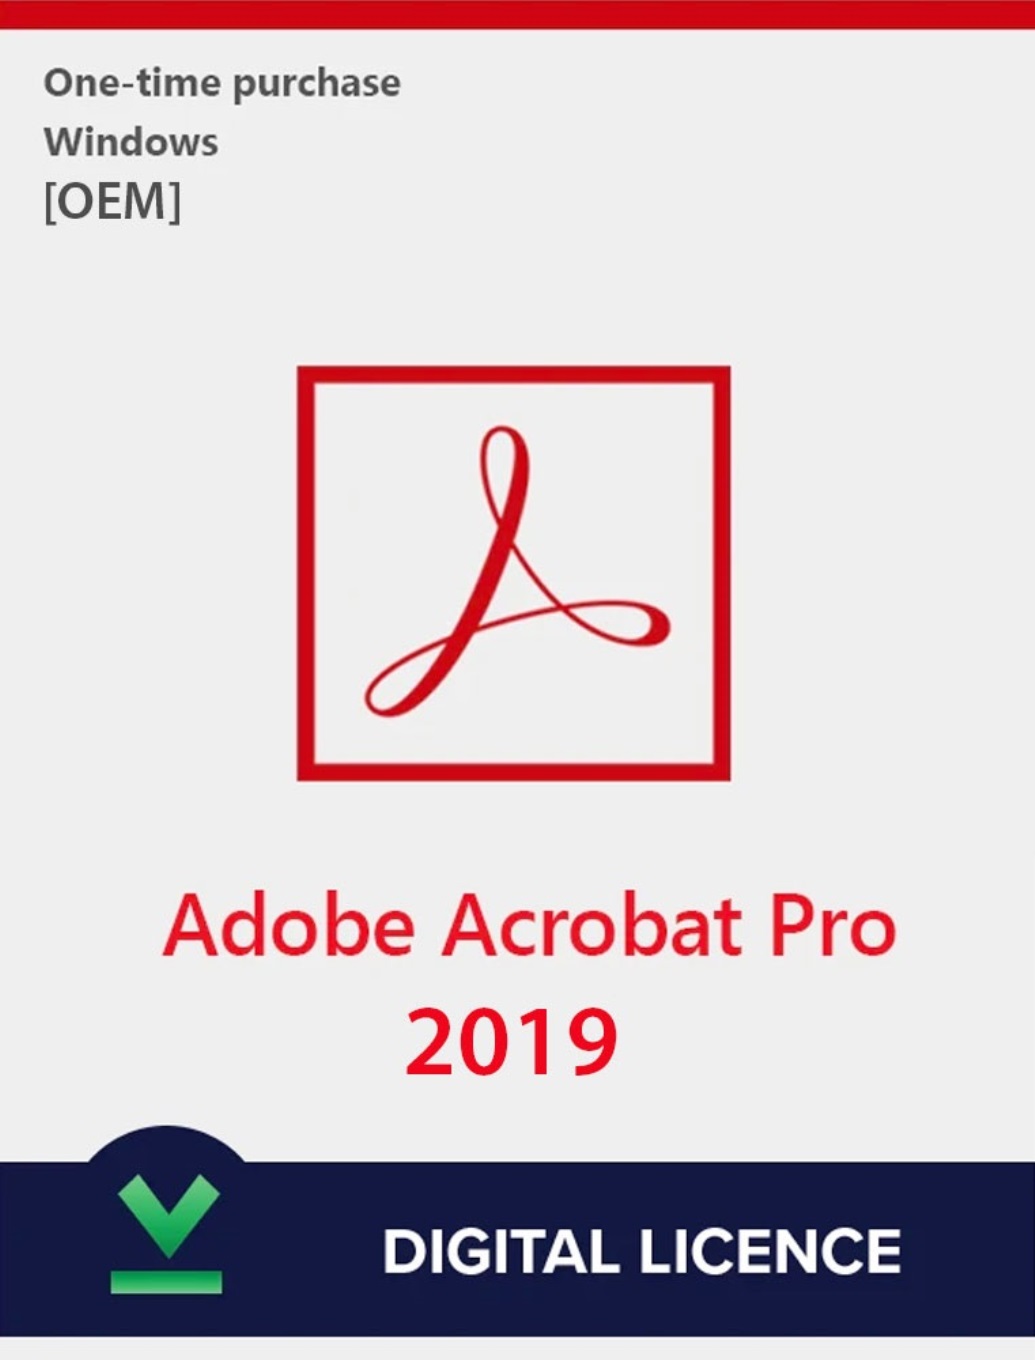 Adobe acrobat pro 2019